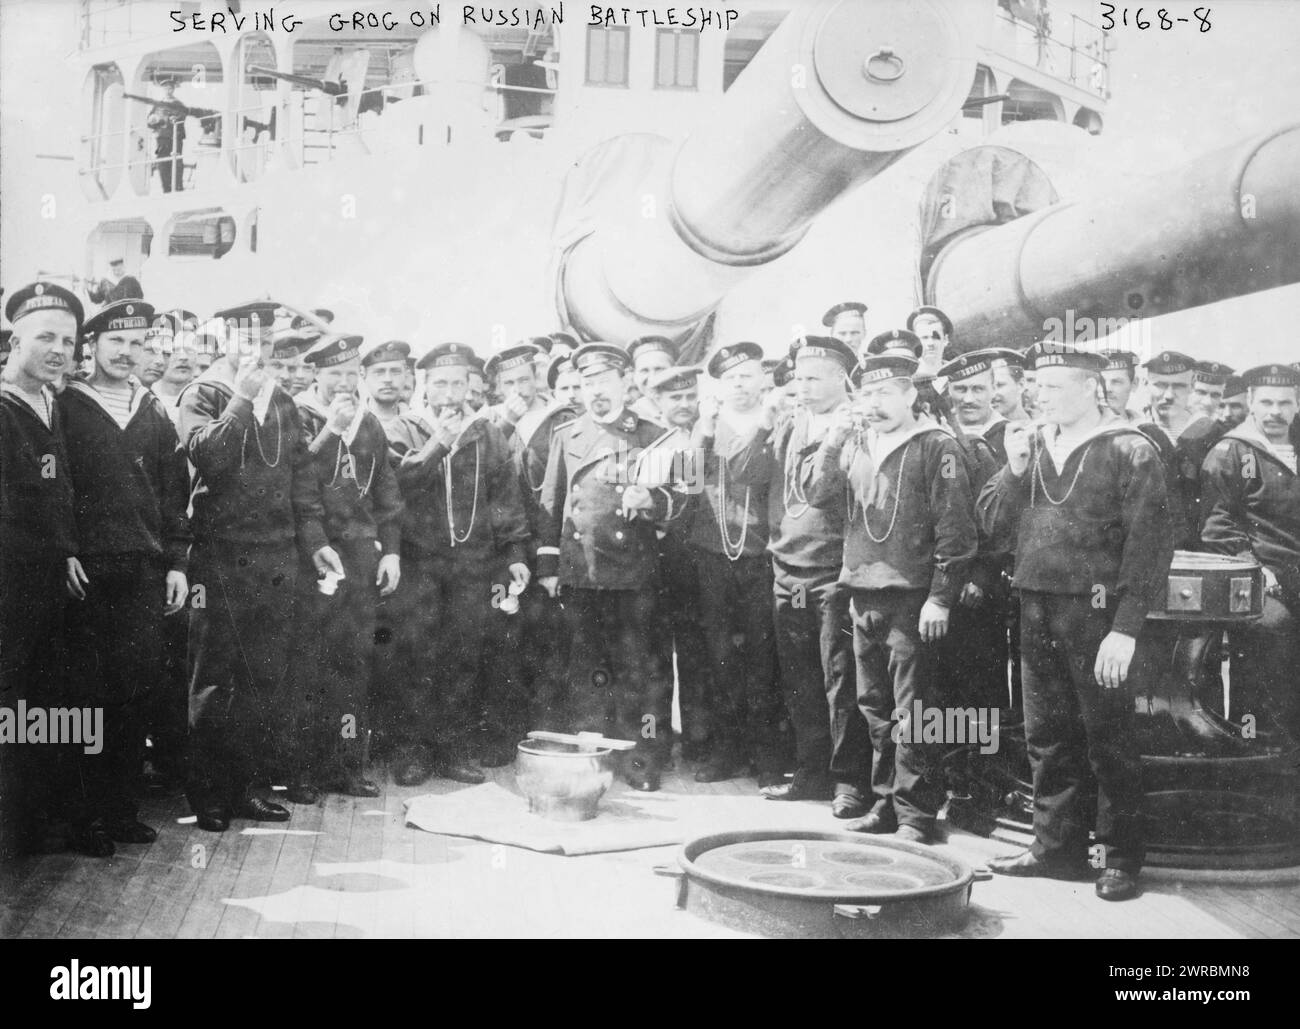 Serving grog on Russian Battleship, Photograph shows crew aboard the Russian warship, Retvizan., between ca. 1910 and ca. 1915, Glass negatives, 1 negative: glass Stock Photo